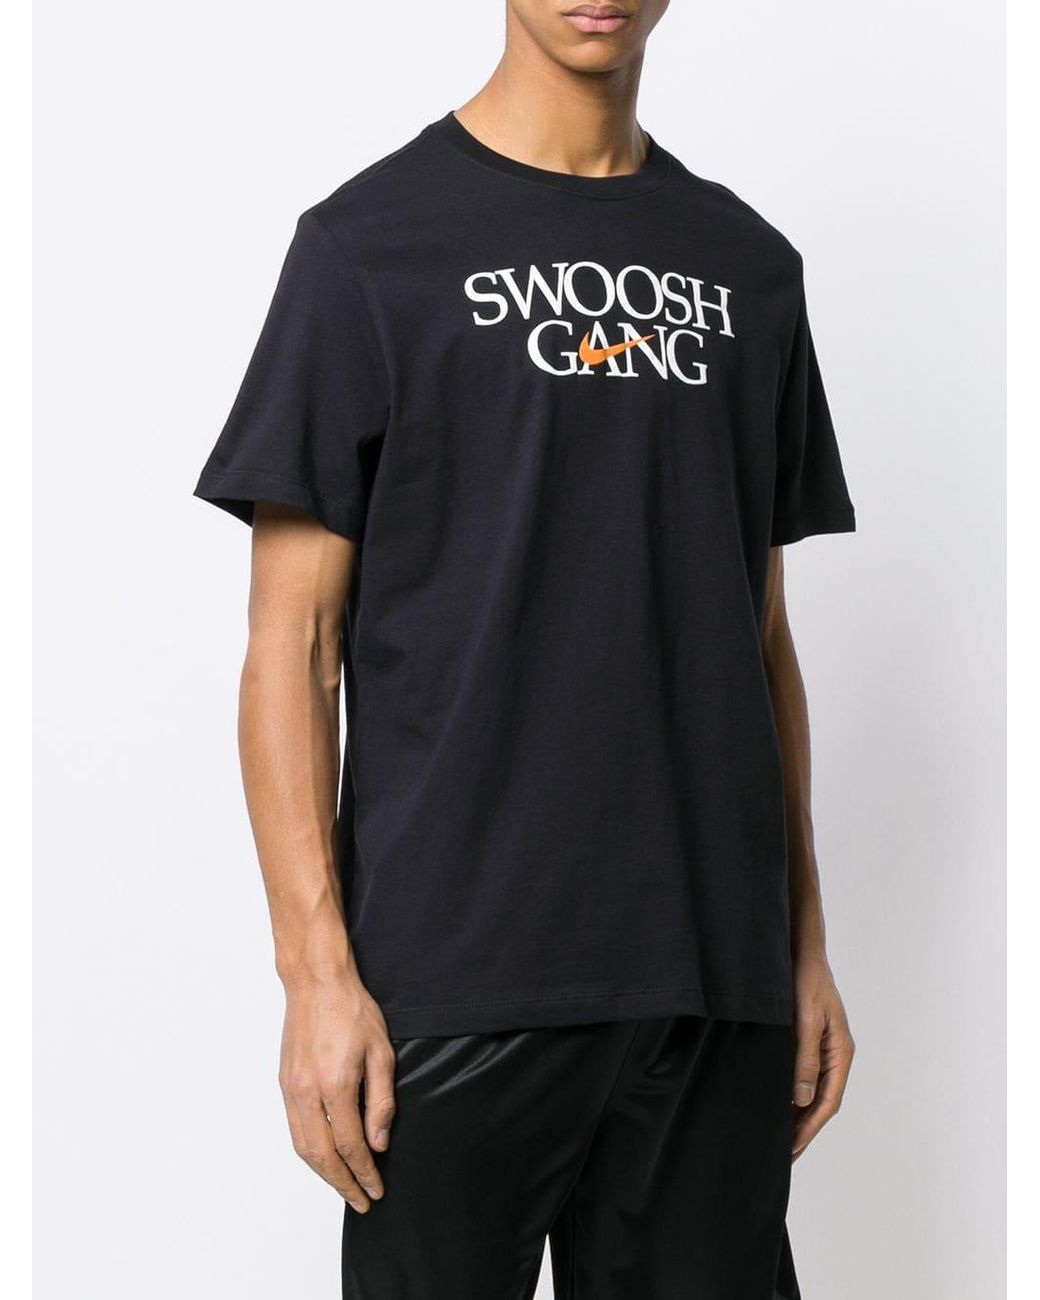 Nike Swoosh Gang T-shirt in Black for Men | Lyst